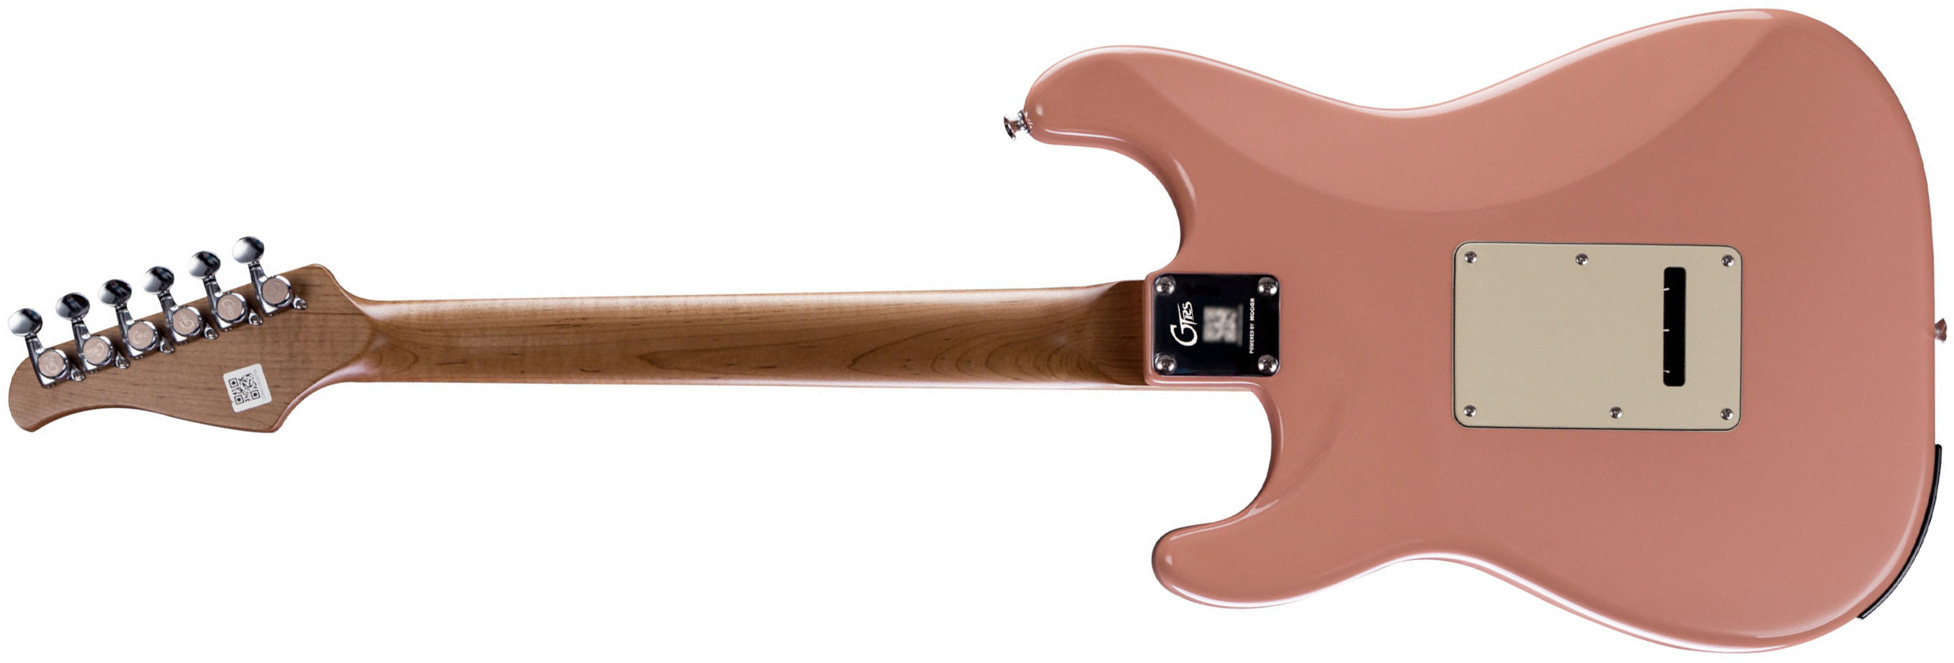 Mooer Gtrs P800 Pro Intelligent Guitar Hss Trem Rw - Flamingo Pink - Modeling guitar - Variation 1